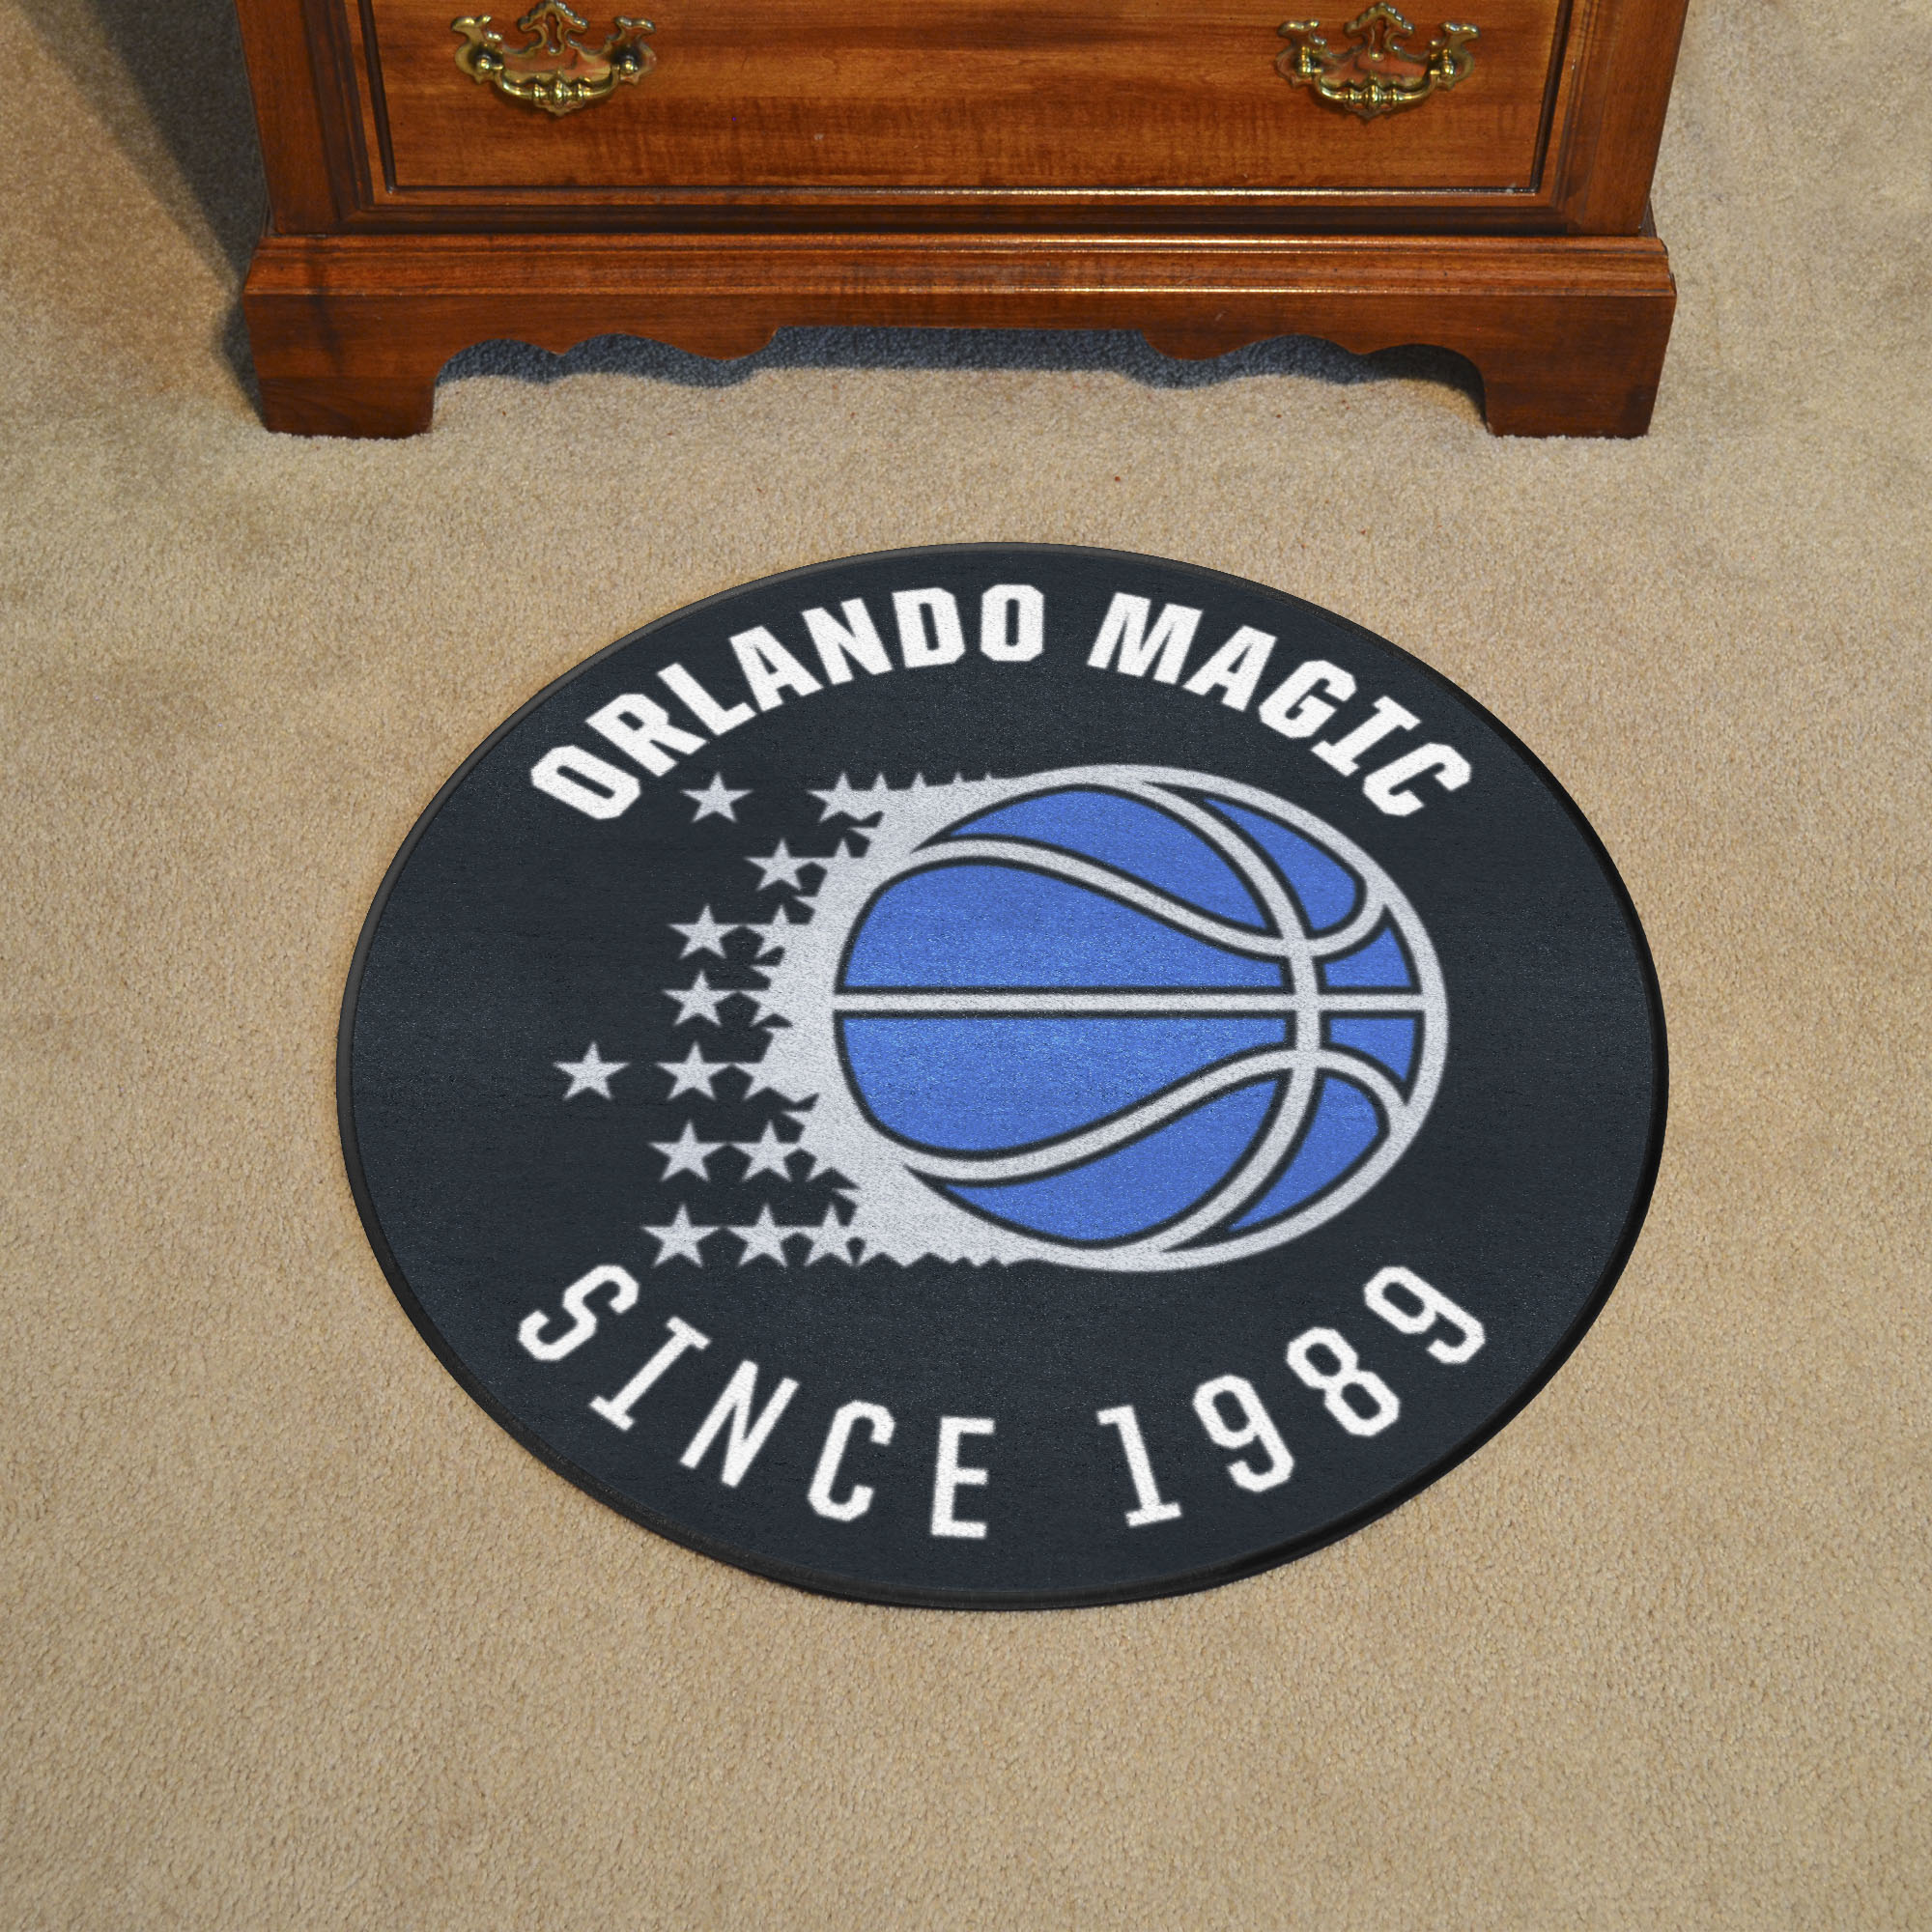 Orlando Magic Home Decor